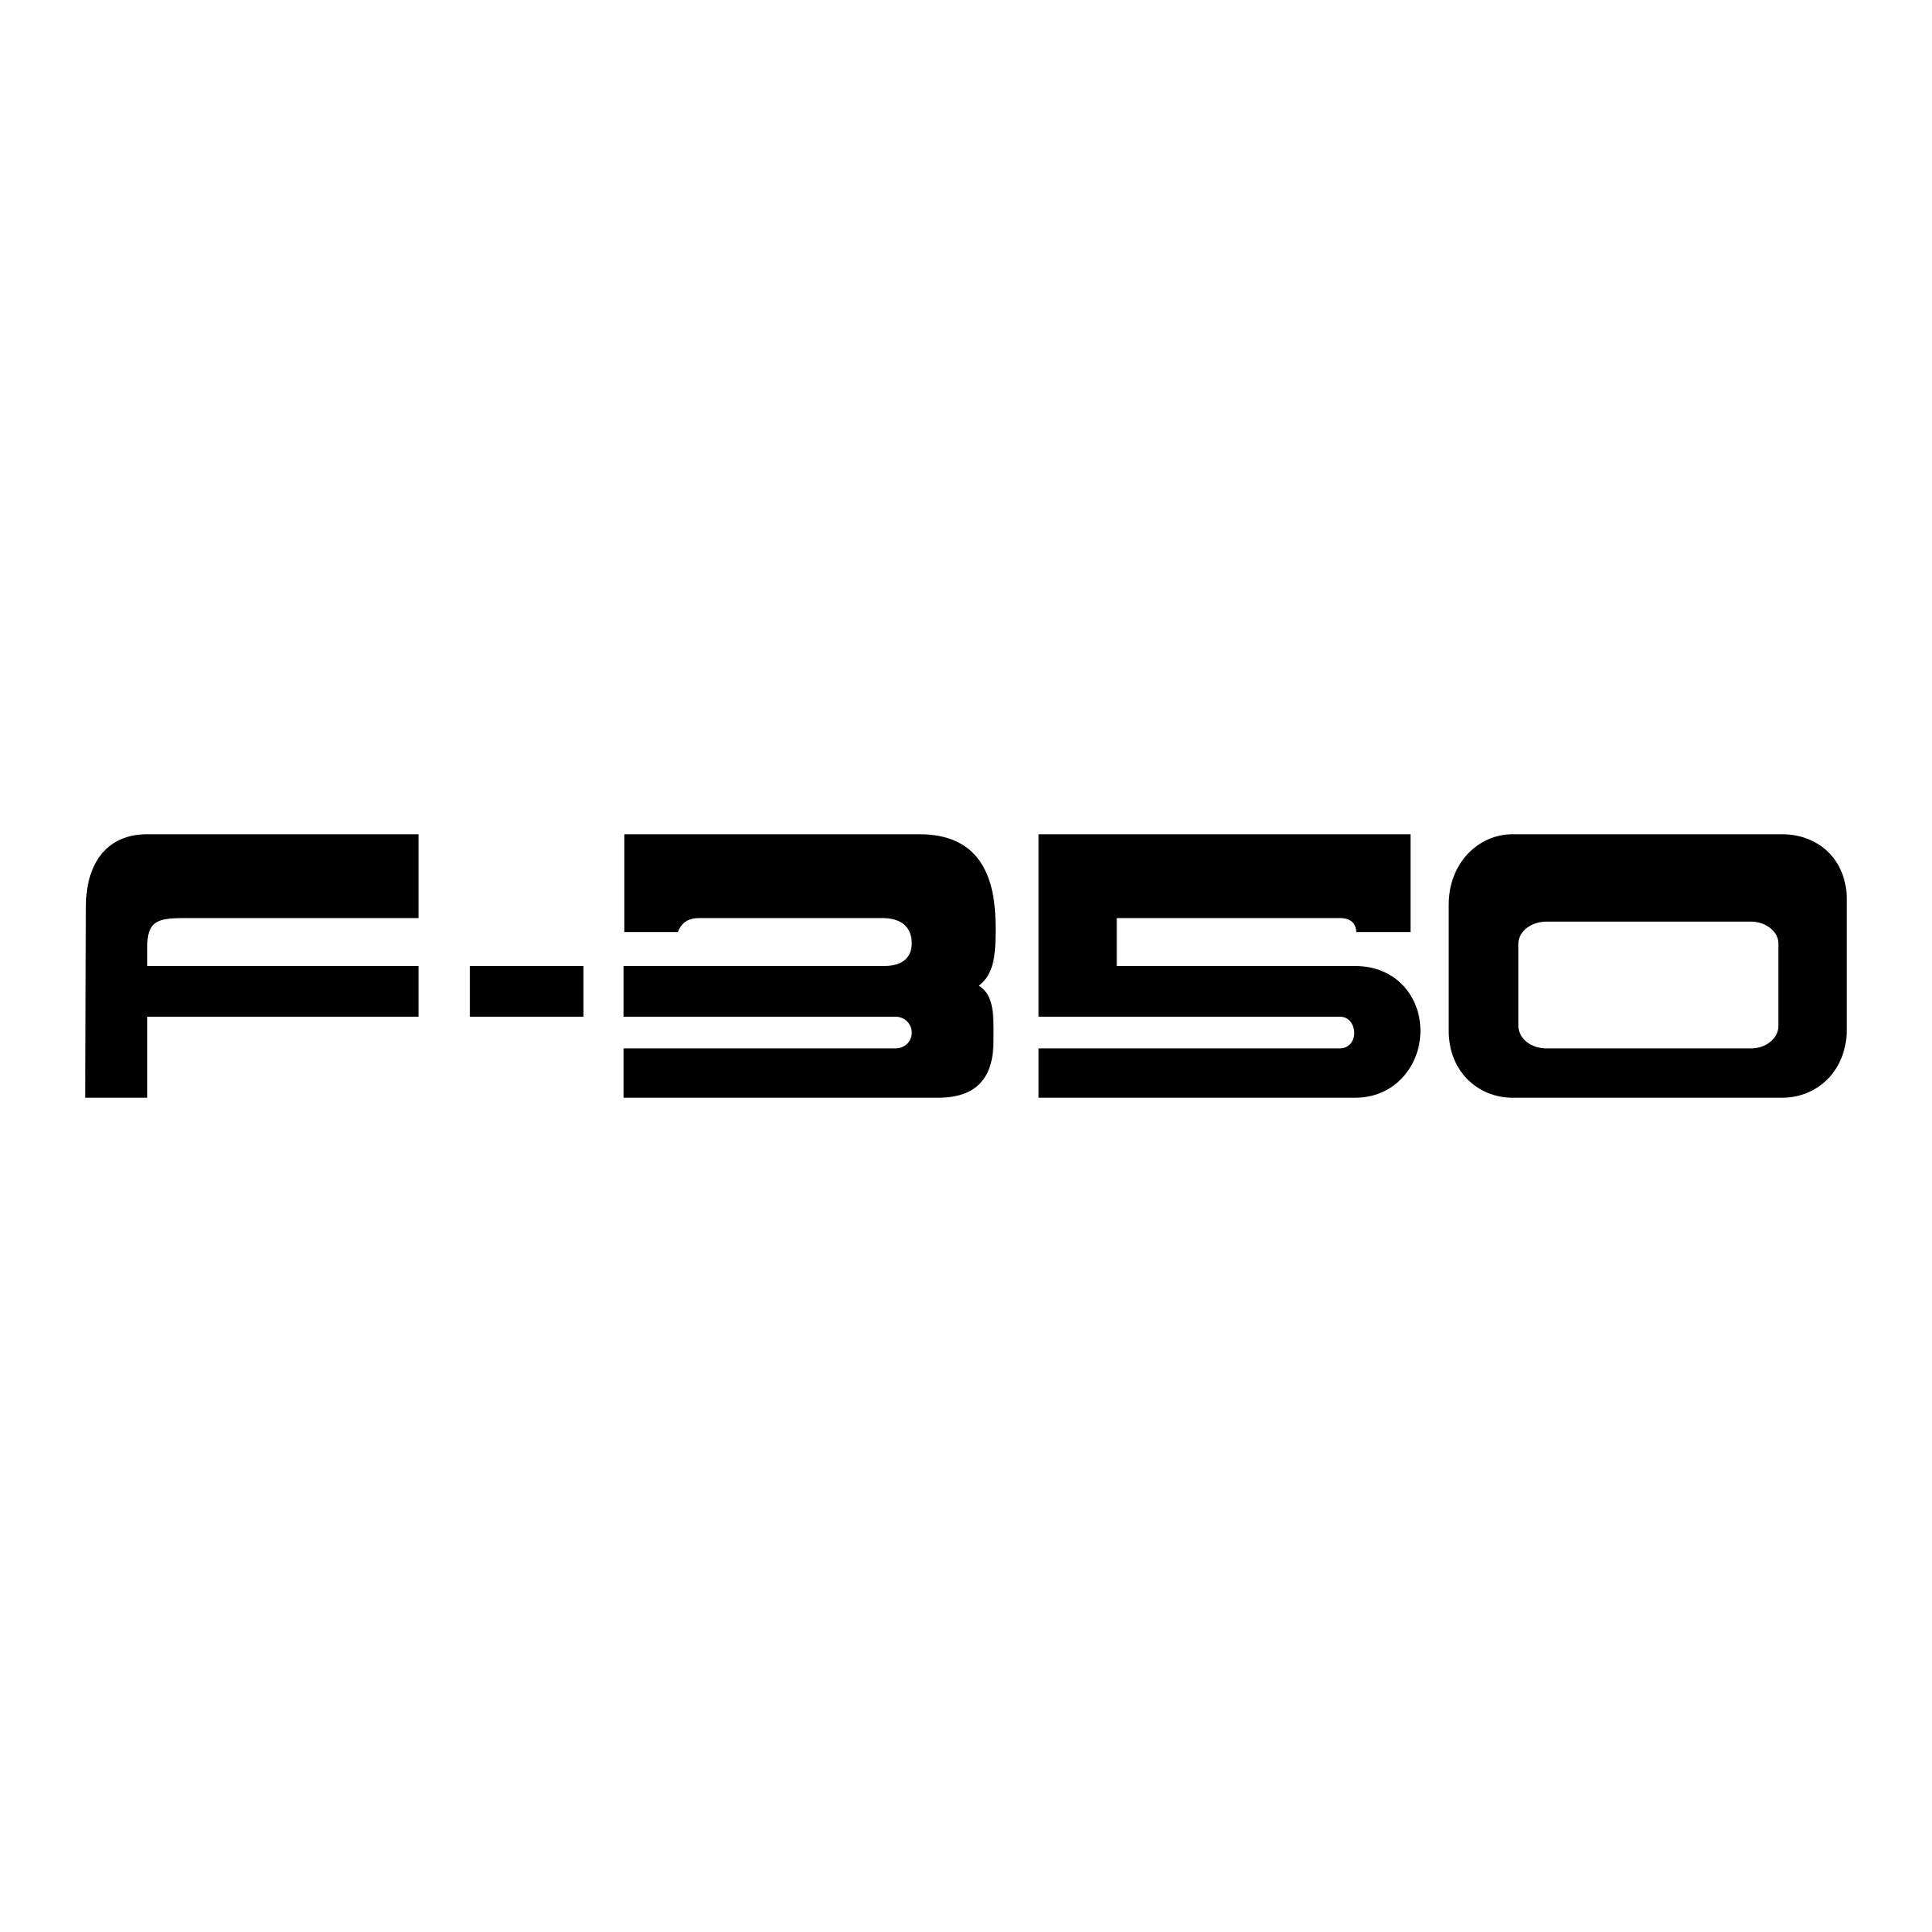 F-350 Logo - F 350 Logo PNG Transparent & SVG Vector